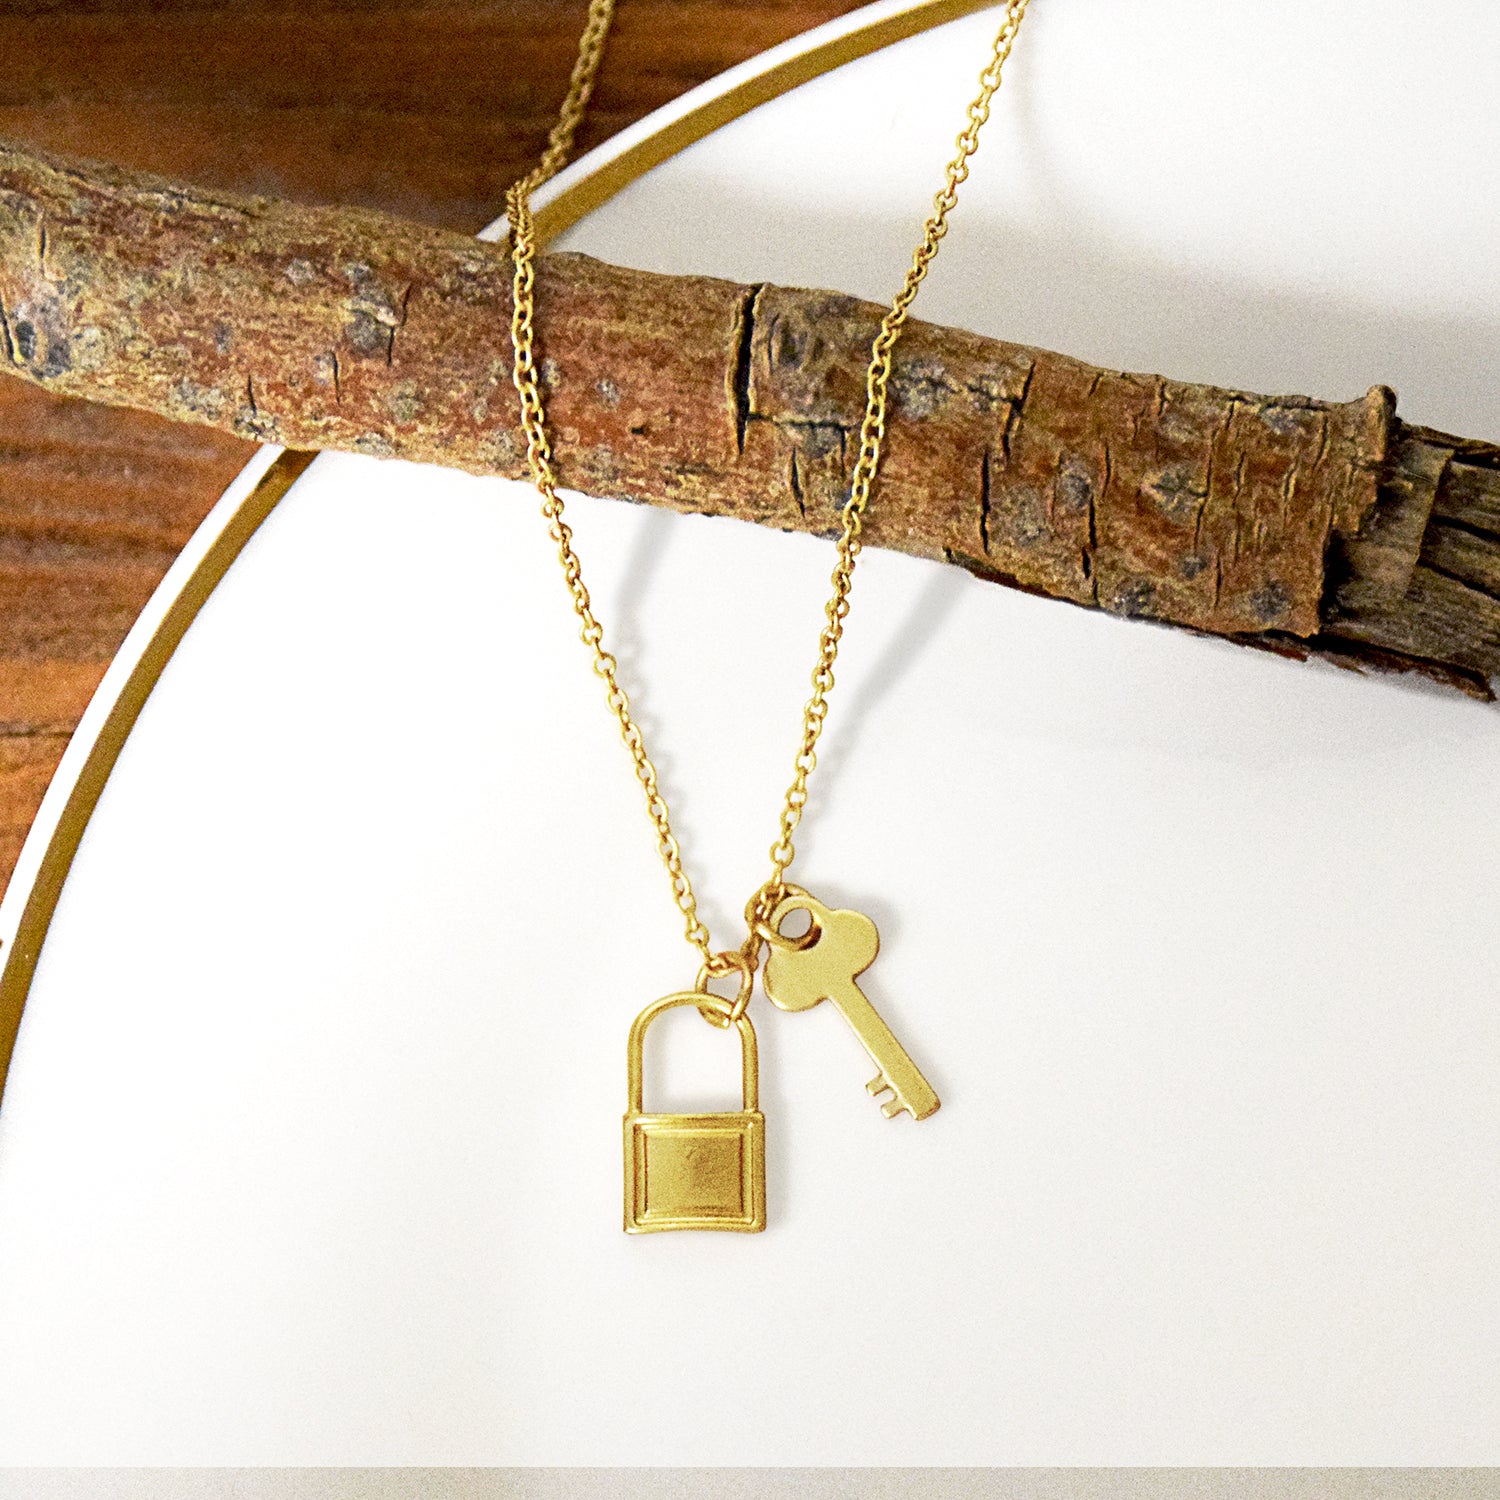 Dainty Lock & Key Necklace - Gold Finish Charm Necklace - Shop